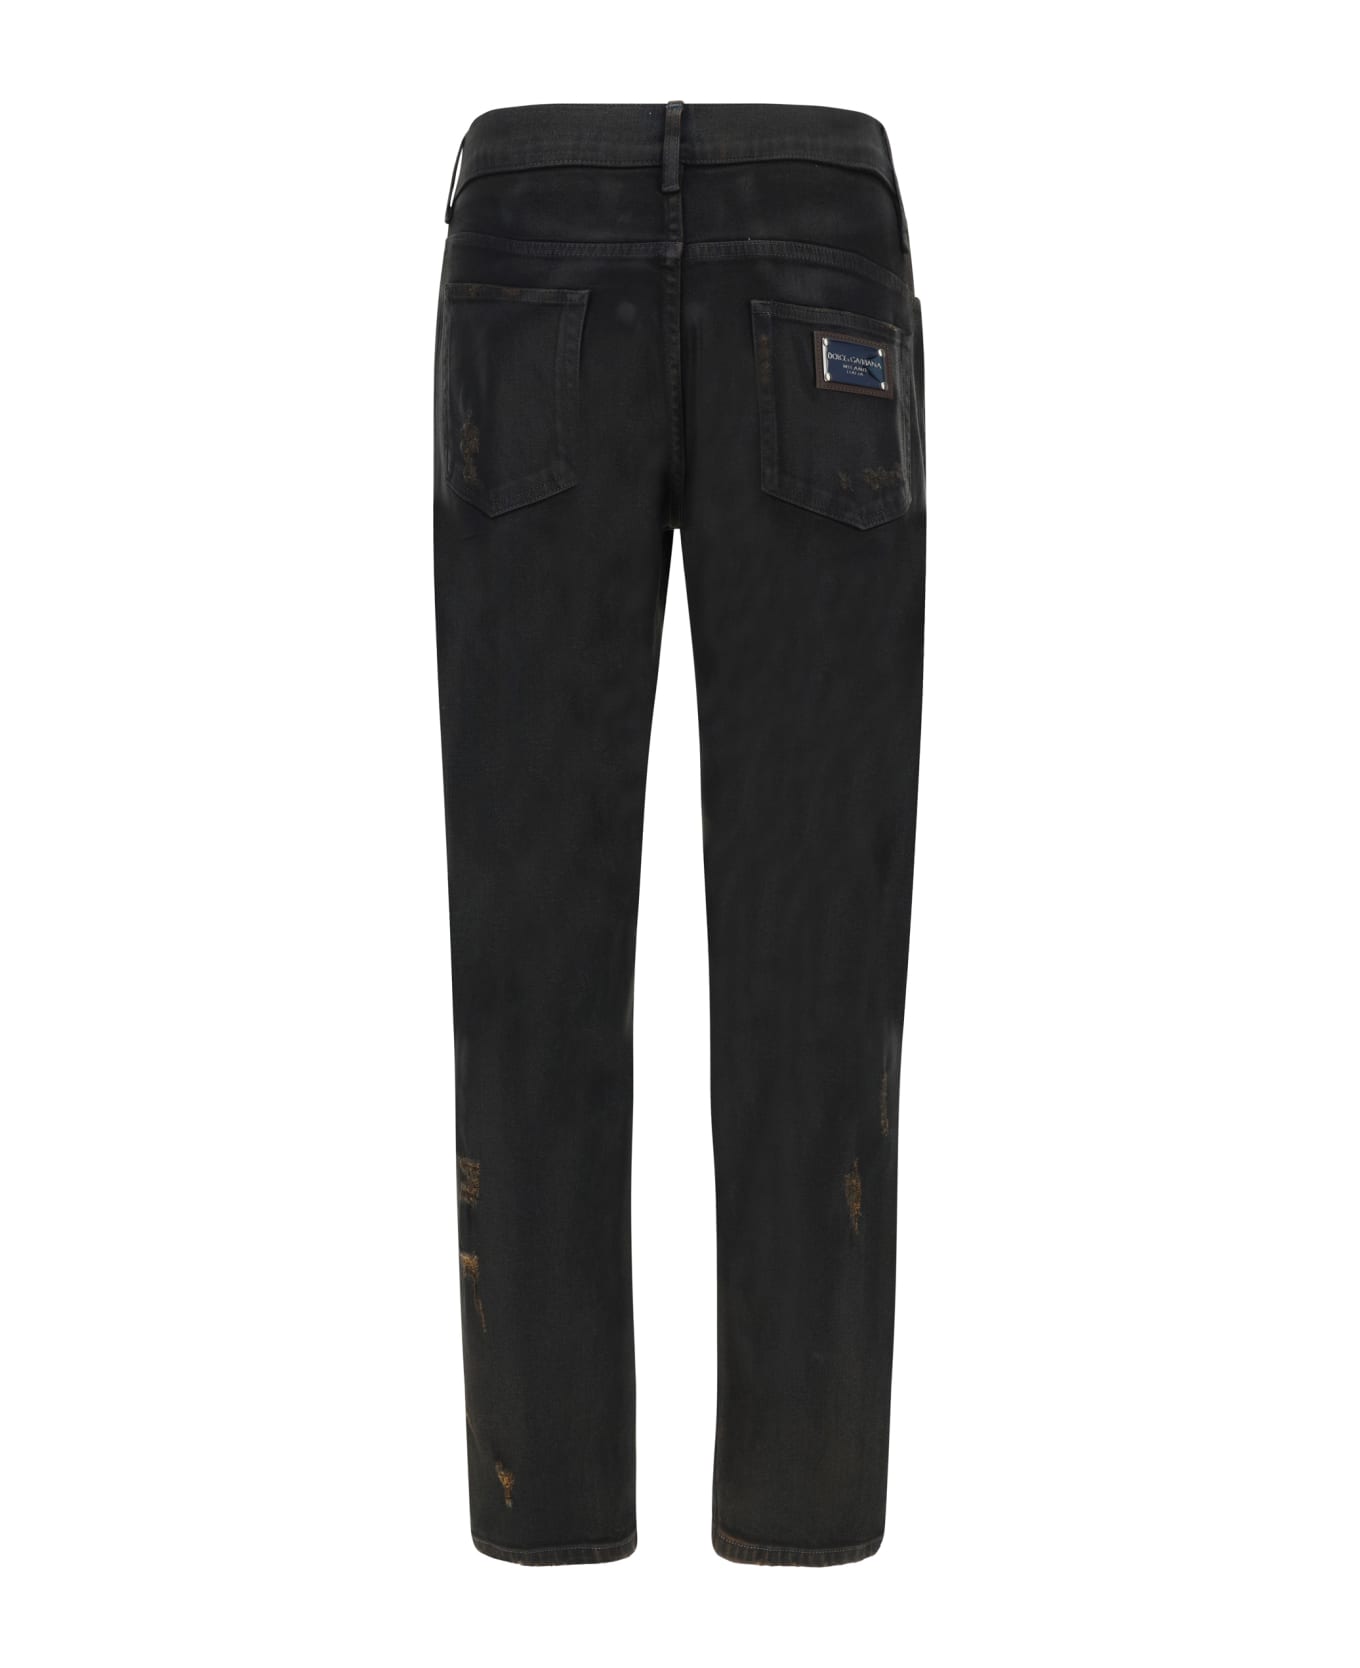 Dolce & Gabbana Slim Fit Jeans - Variante Abbinata